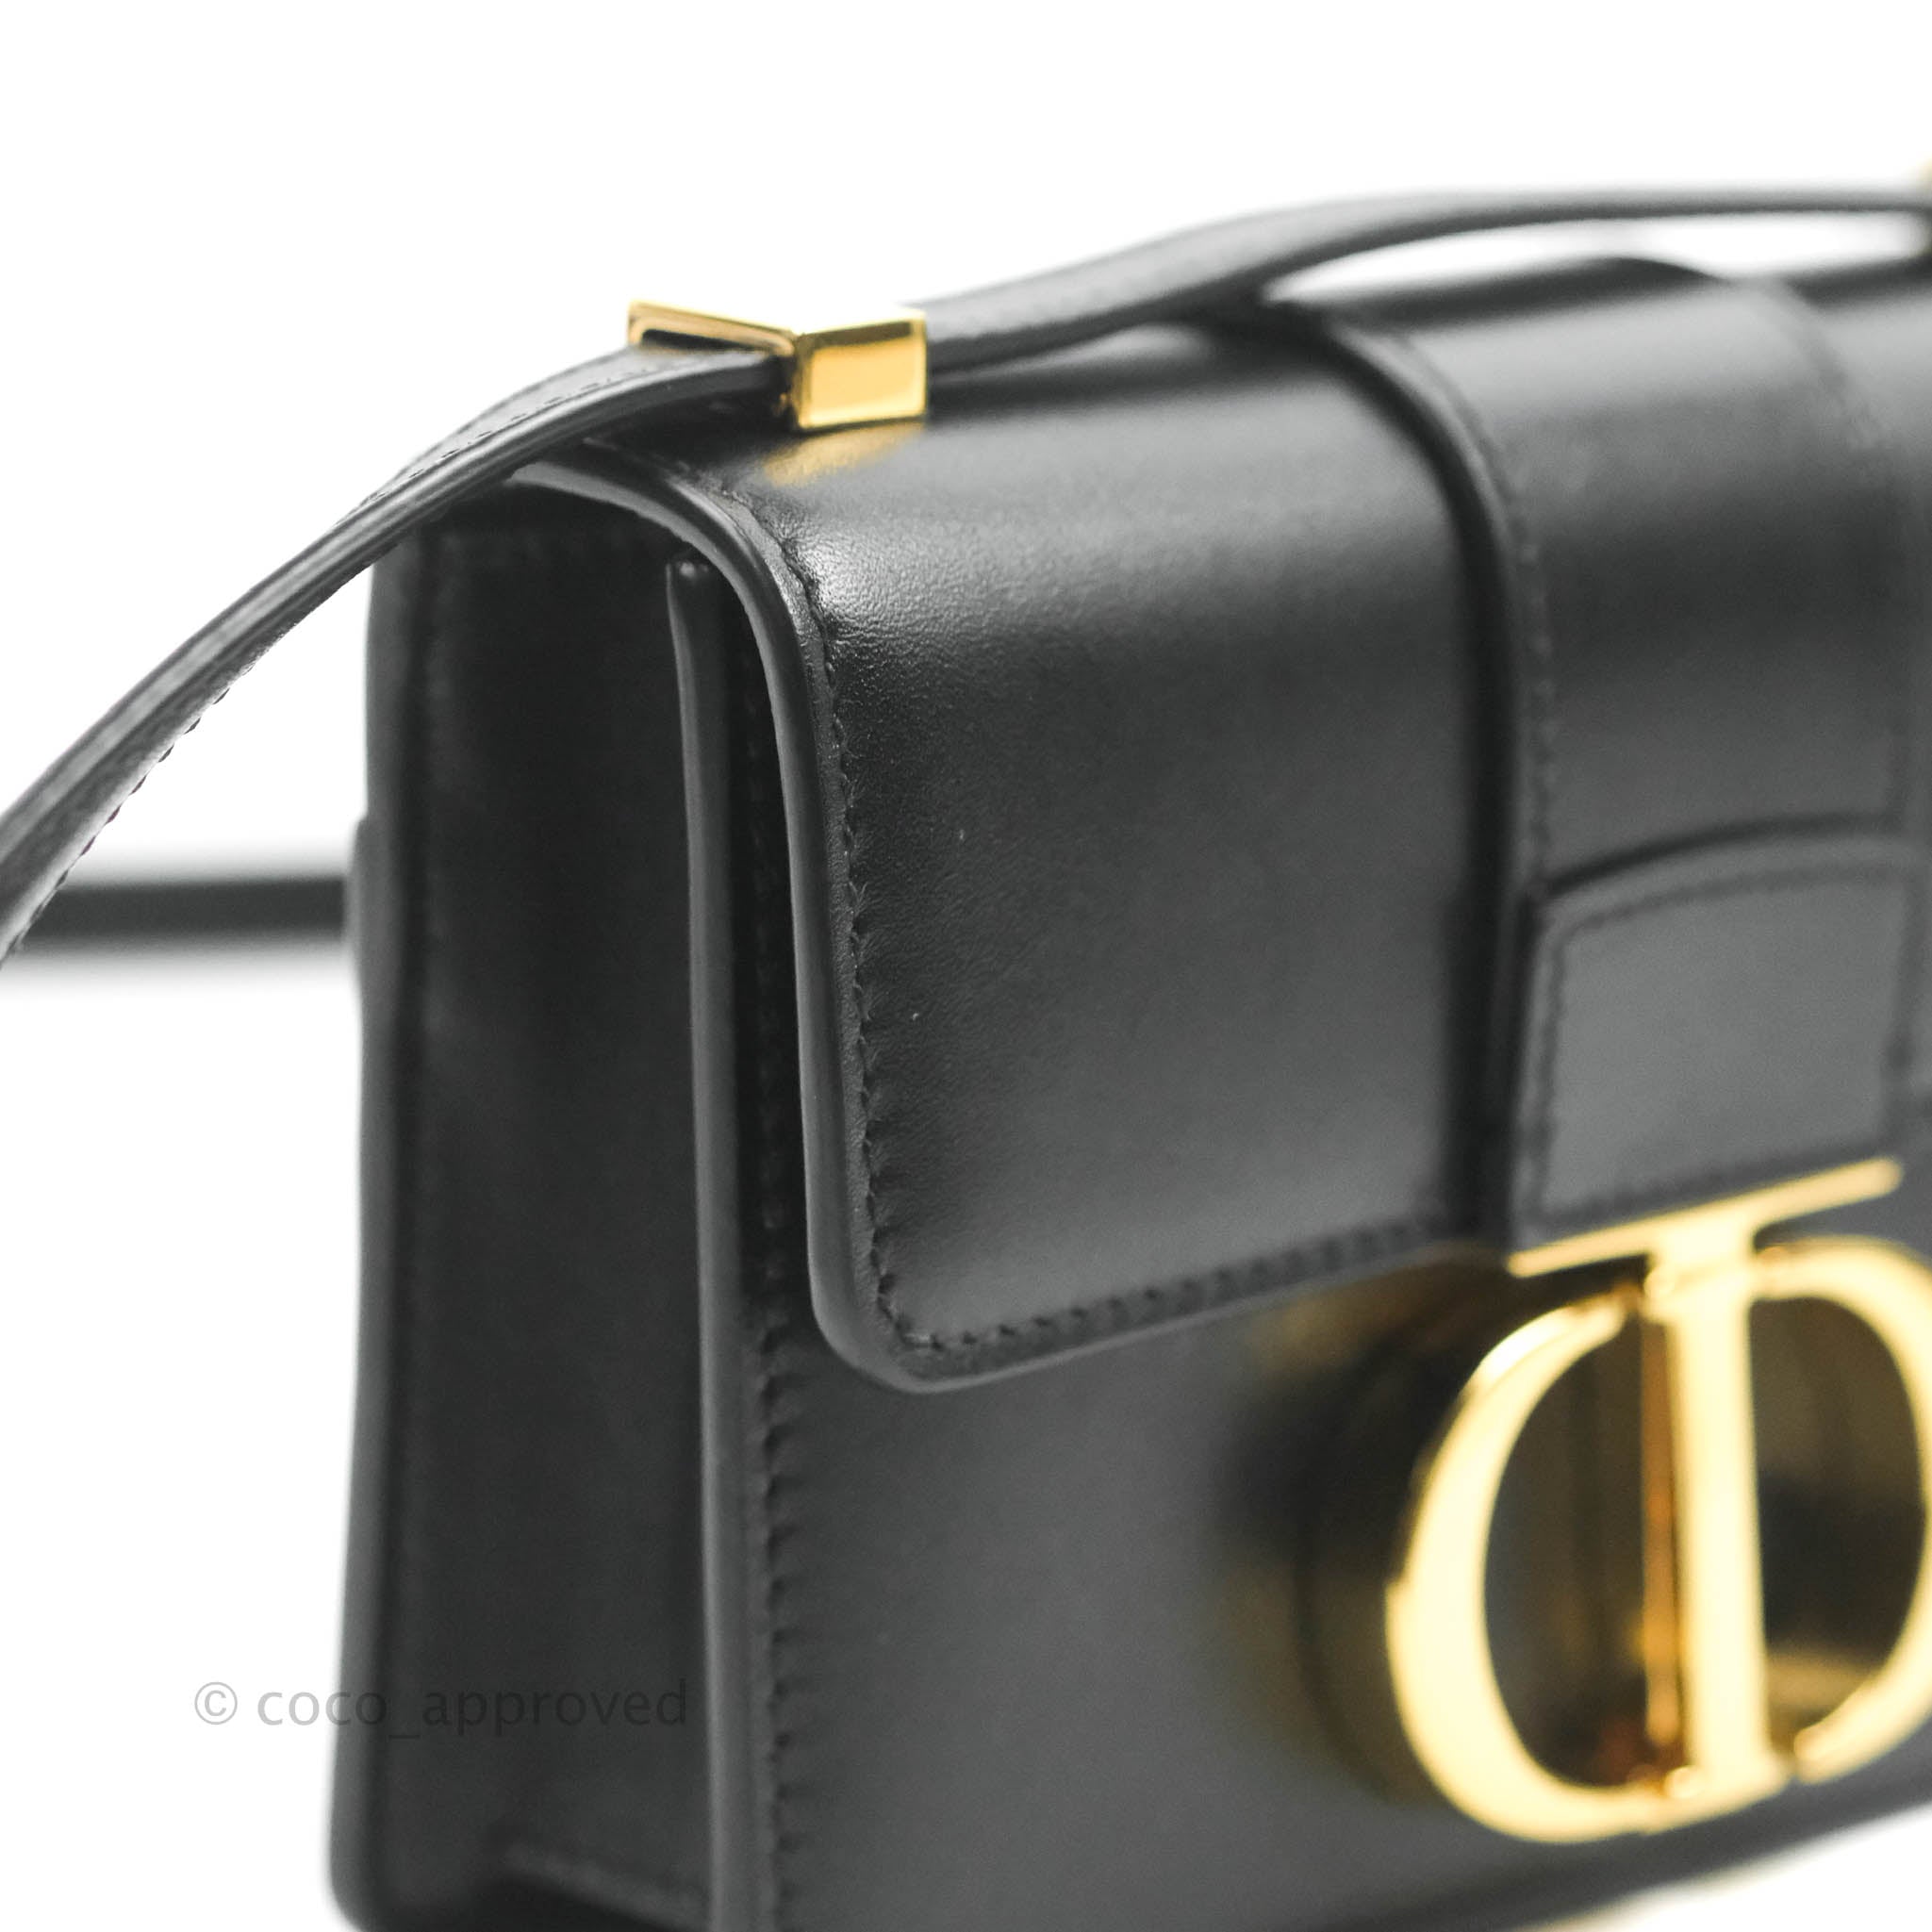 Christian Dior Micro 30 Montaigne Bag Smooth Calfskin In Light